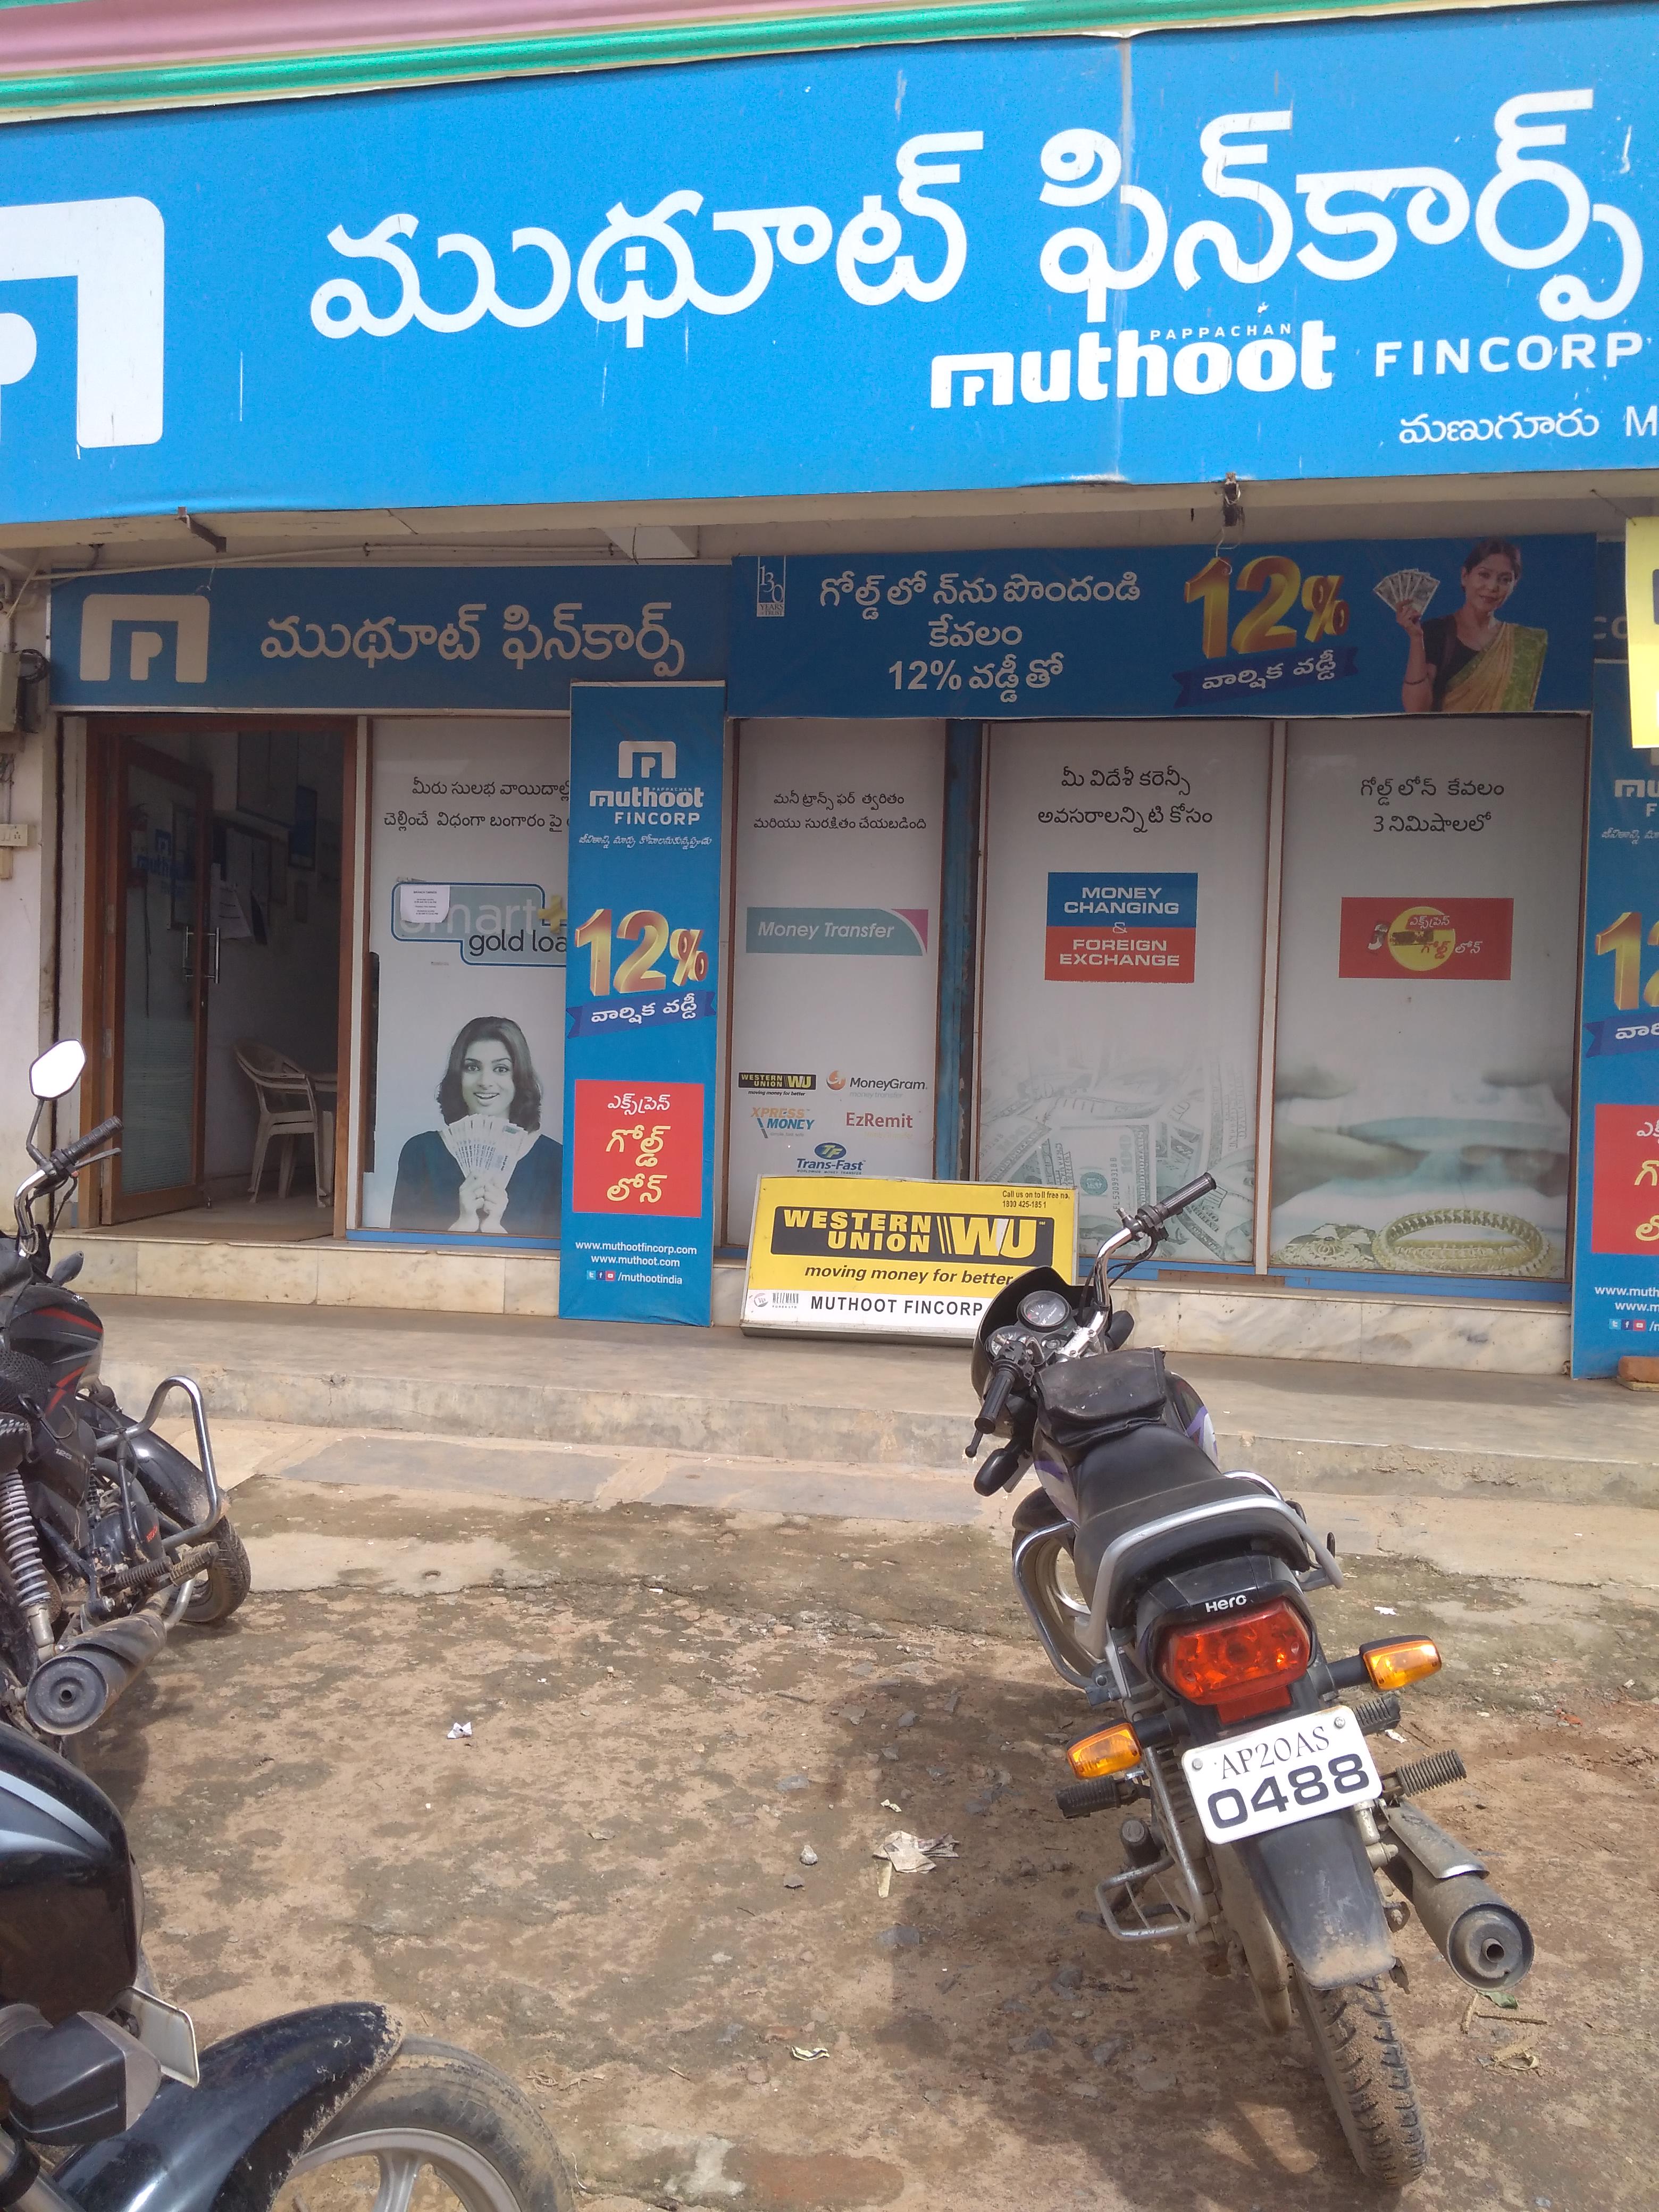 Muthoot Fincorp Gold Loan Services in Manuguru, Khammam, Telangana